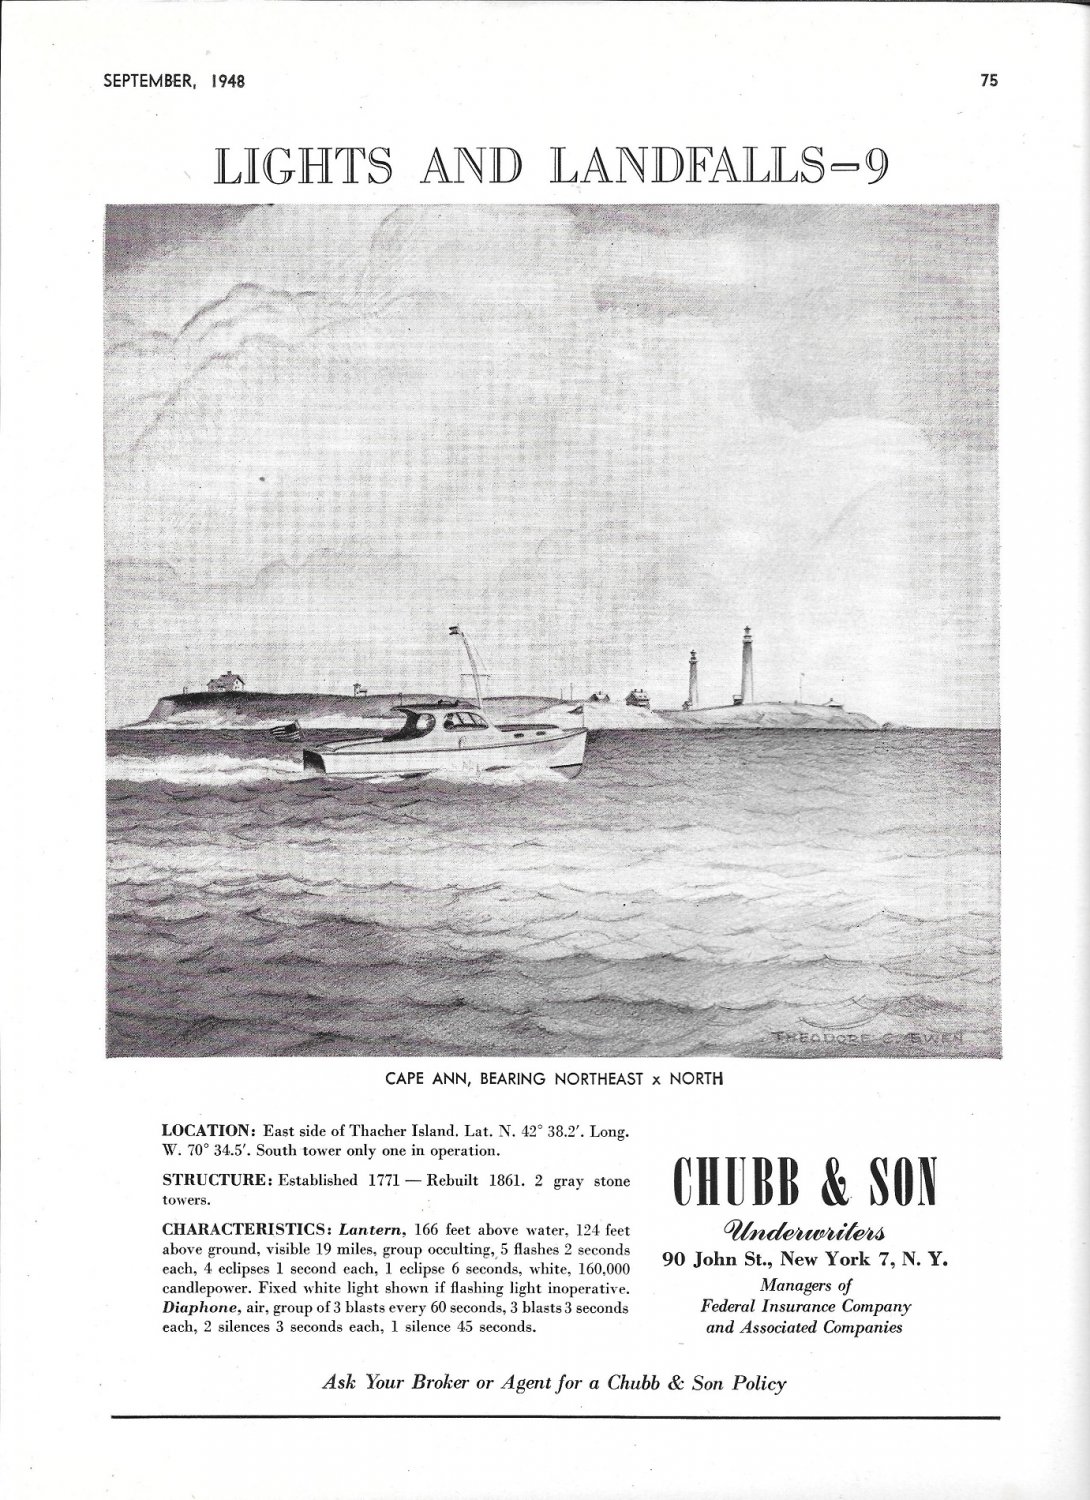 1948 Chubb Insurance Ad- Drawing of Cape Ann